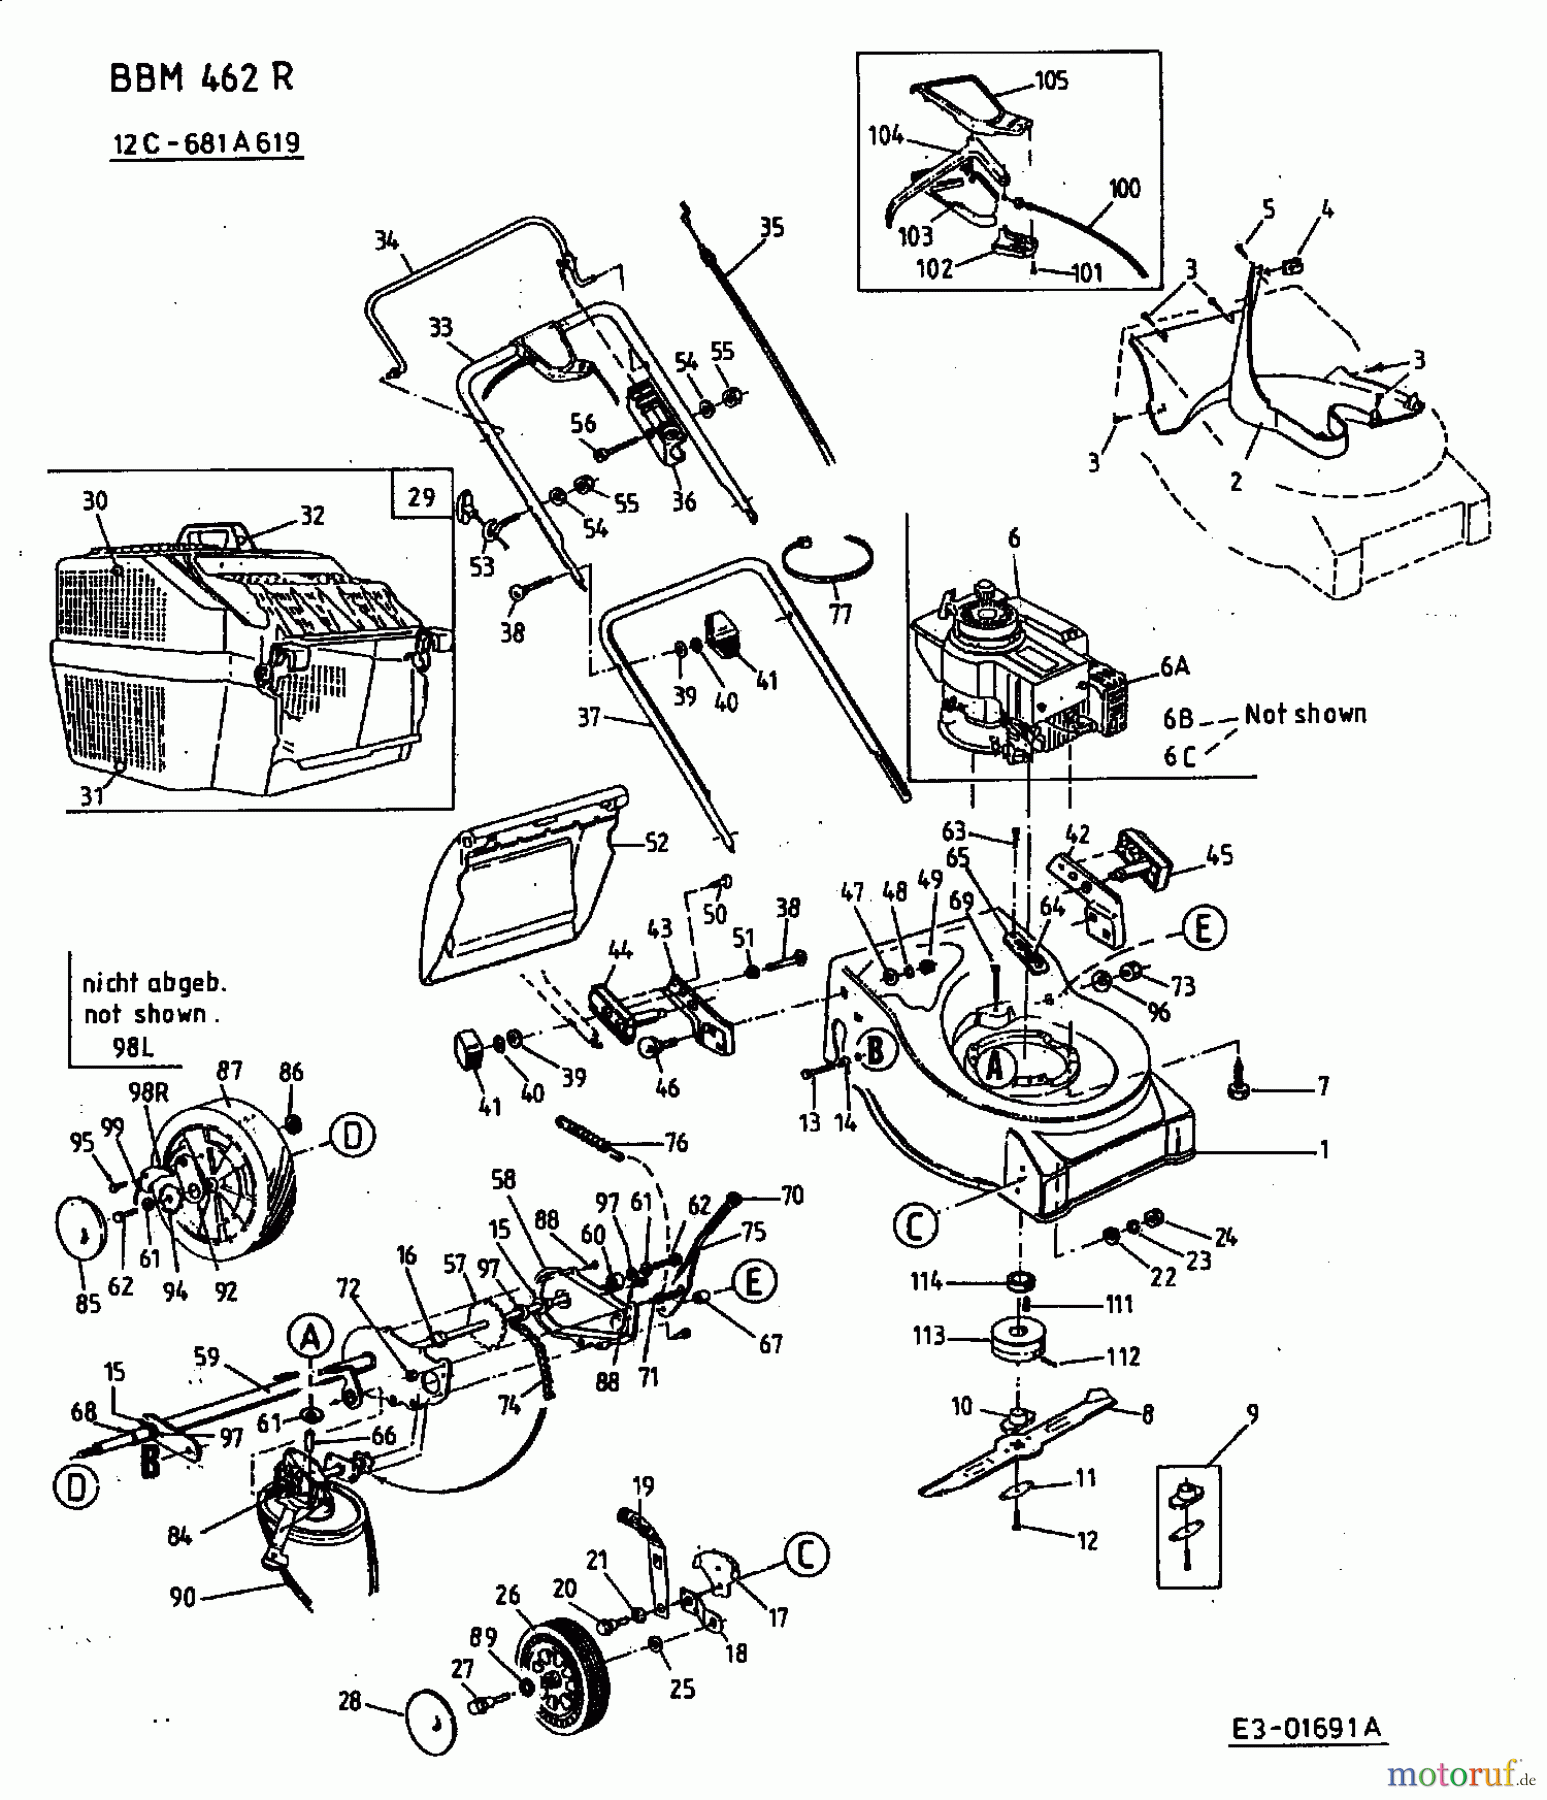  Budget Motormäher mit Antrieb BBM 462 R 12C-681A619  (2002) Grundgerät